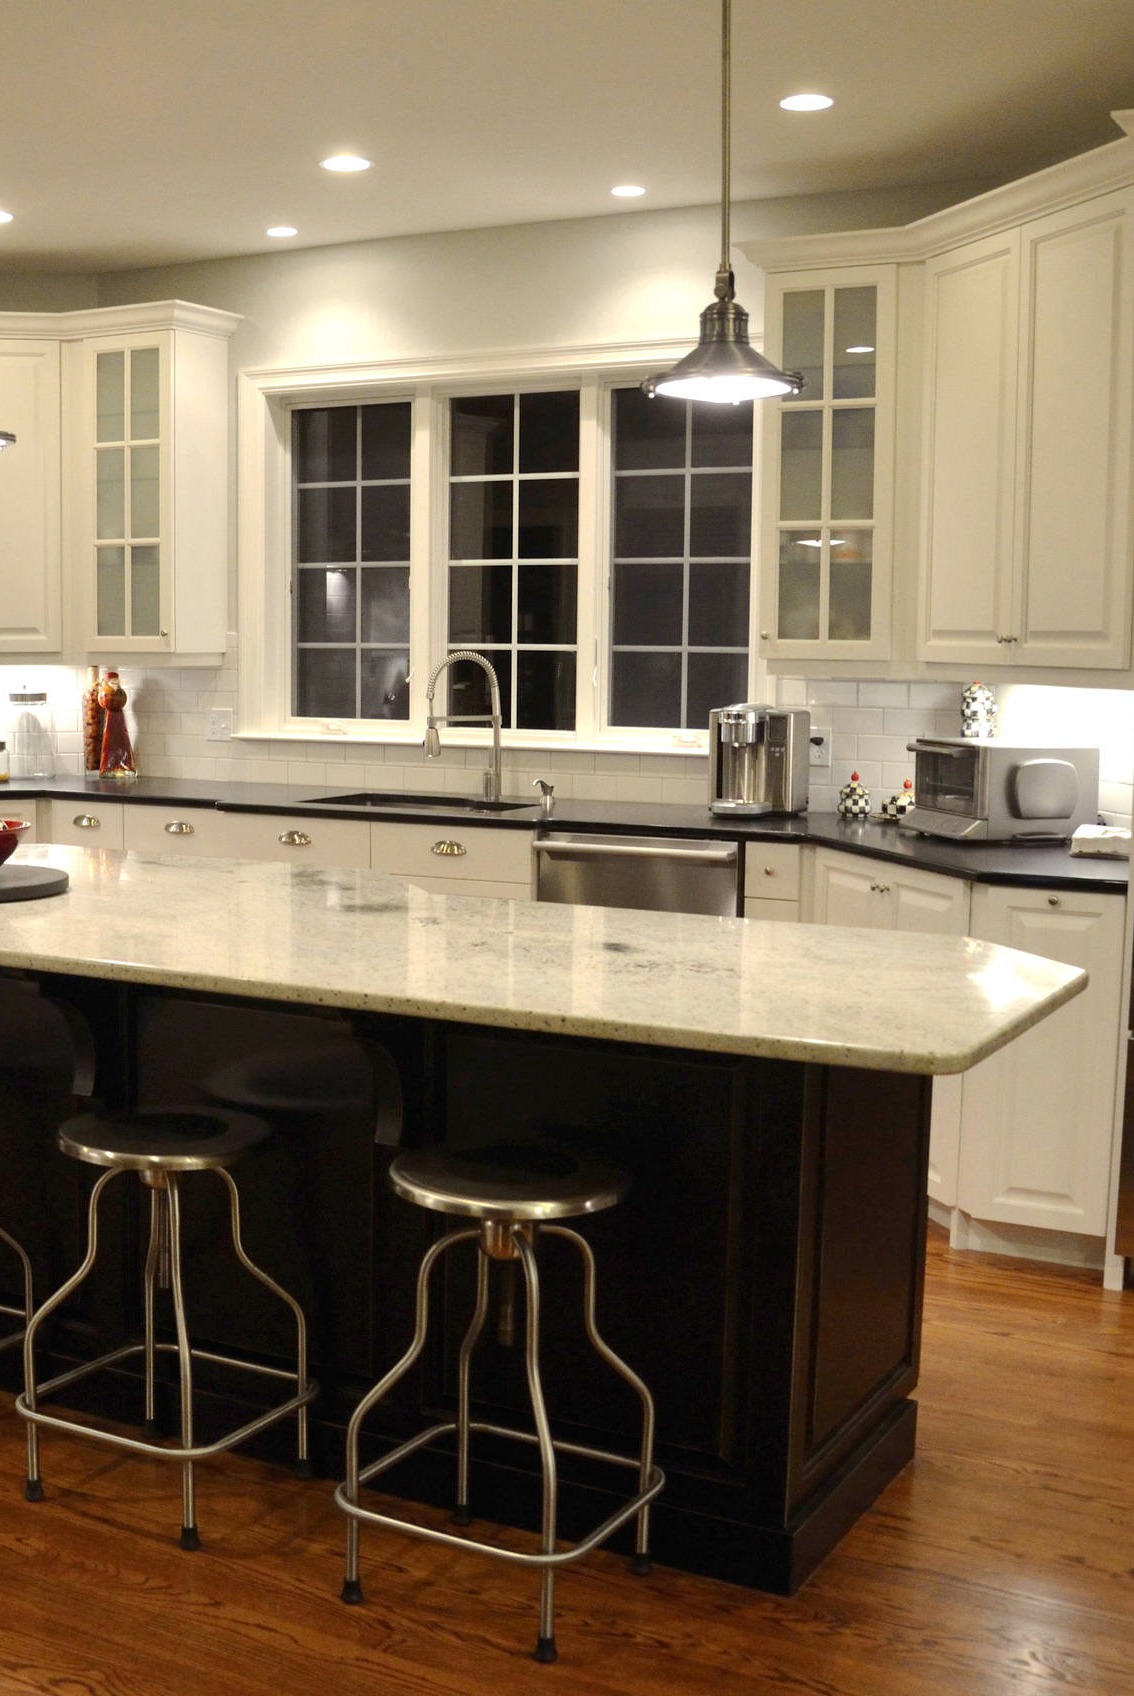 White Kitchen Cabinets Black Granite Countertops WhiteBacksplash Dark Hardwood Floor